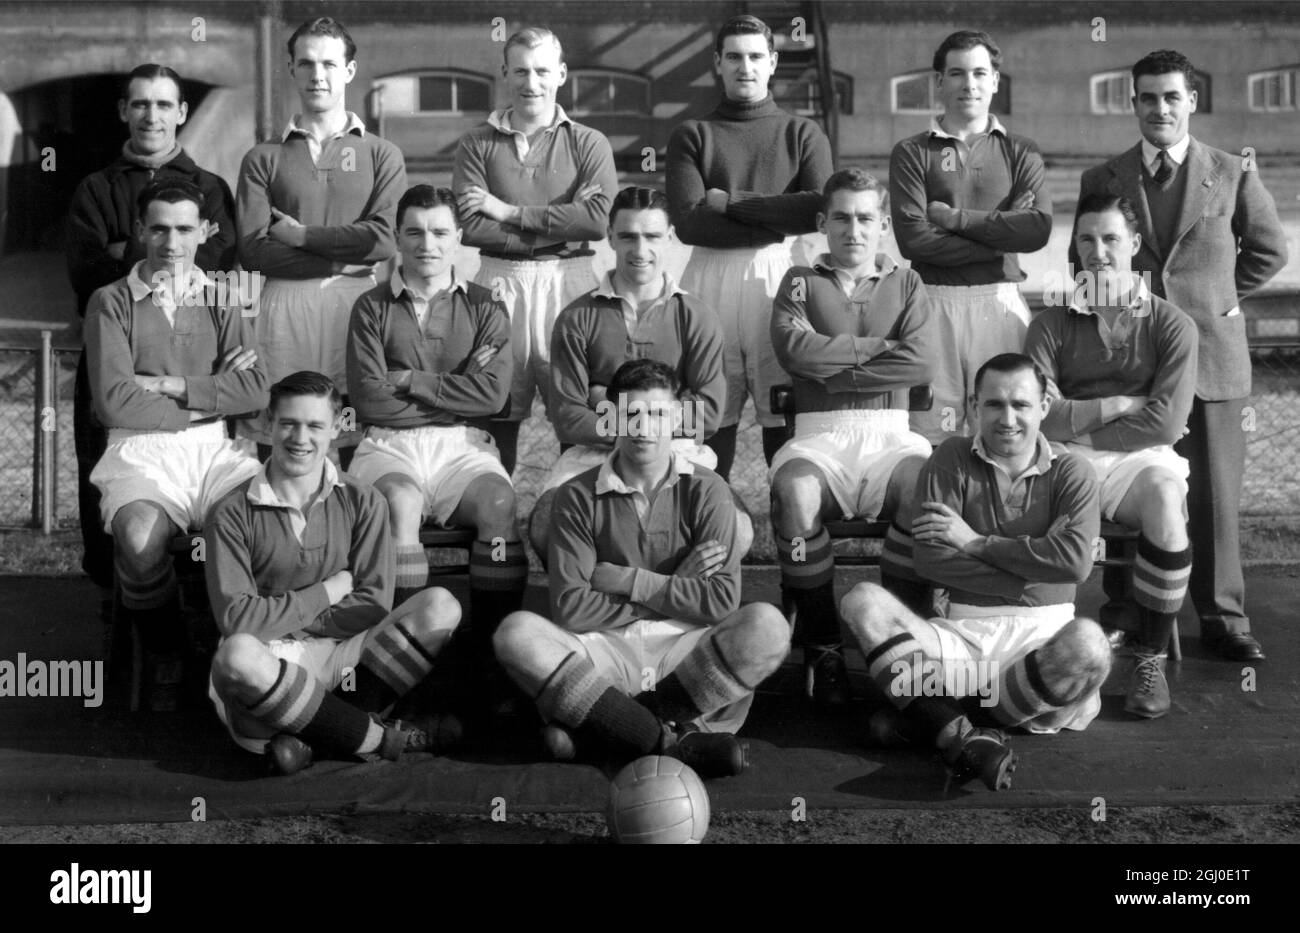 Chelsea Football Team Back Row: L.Goulden (allenatore), W.Dickson, R.Williams, W.Robertson, S.Tickridge e N.Smith (allenatore) seconda fila: S.D'arcy, K.Armstrong, R.Campbell (capitano), R.Bentley, J.Harris. Seduta: W.Grey, R.Smith e S.Bathgate. 13 marzo 1952 Foto Stock